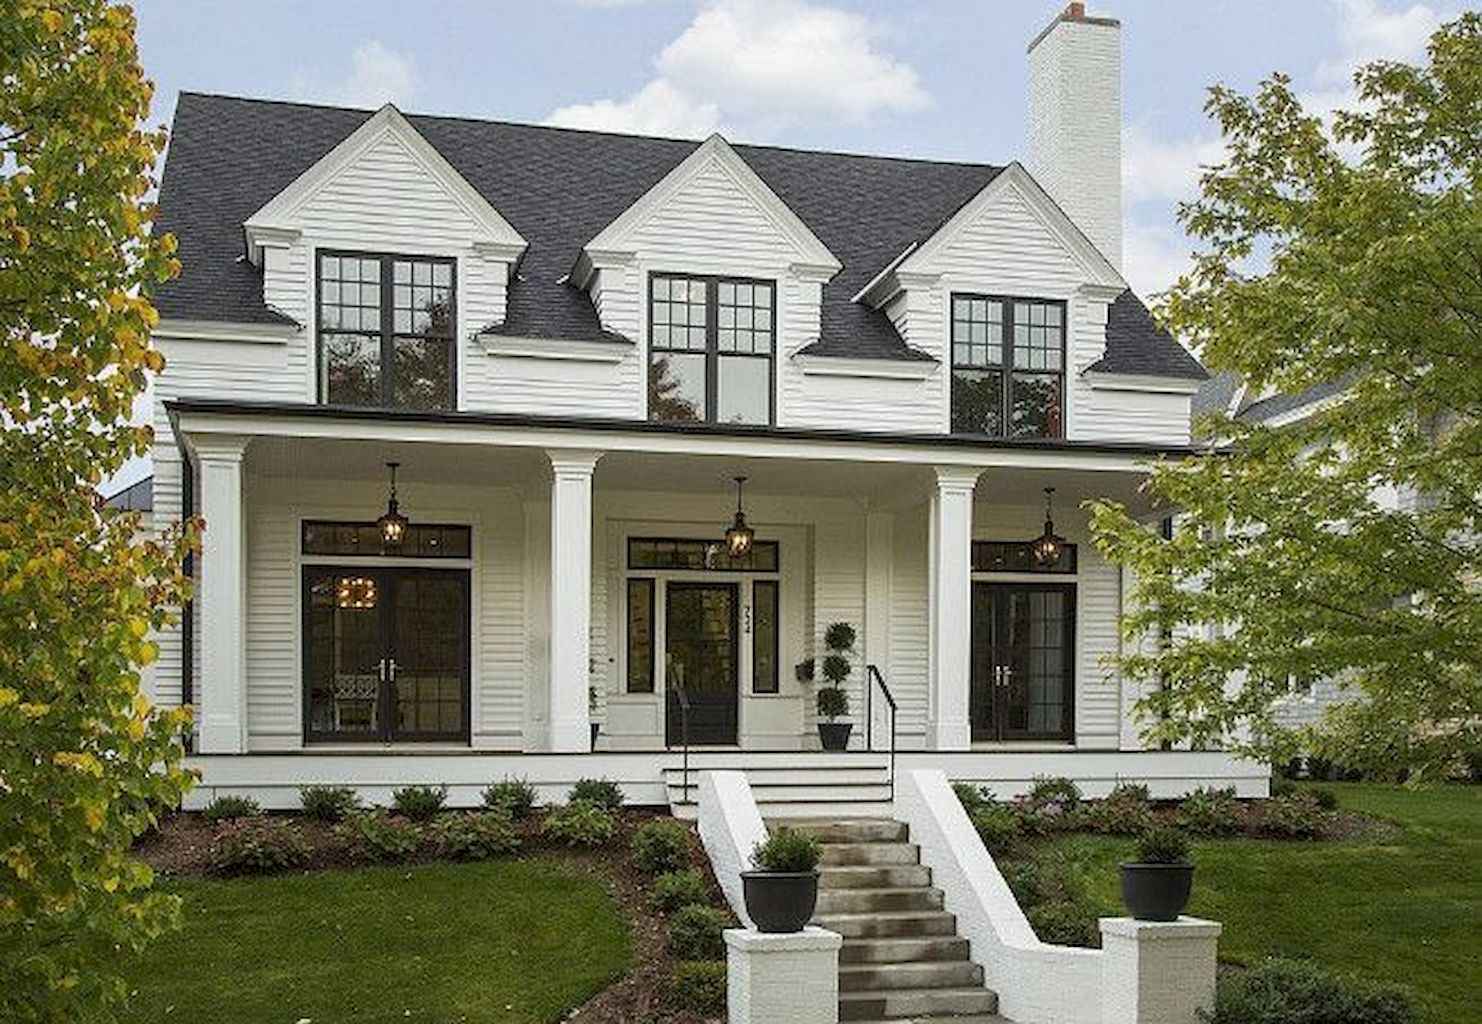 70 Best Modern Farmhouse Exterior Design Ideas - decorapatio.com